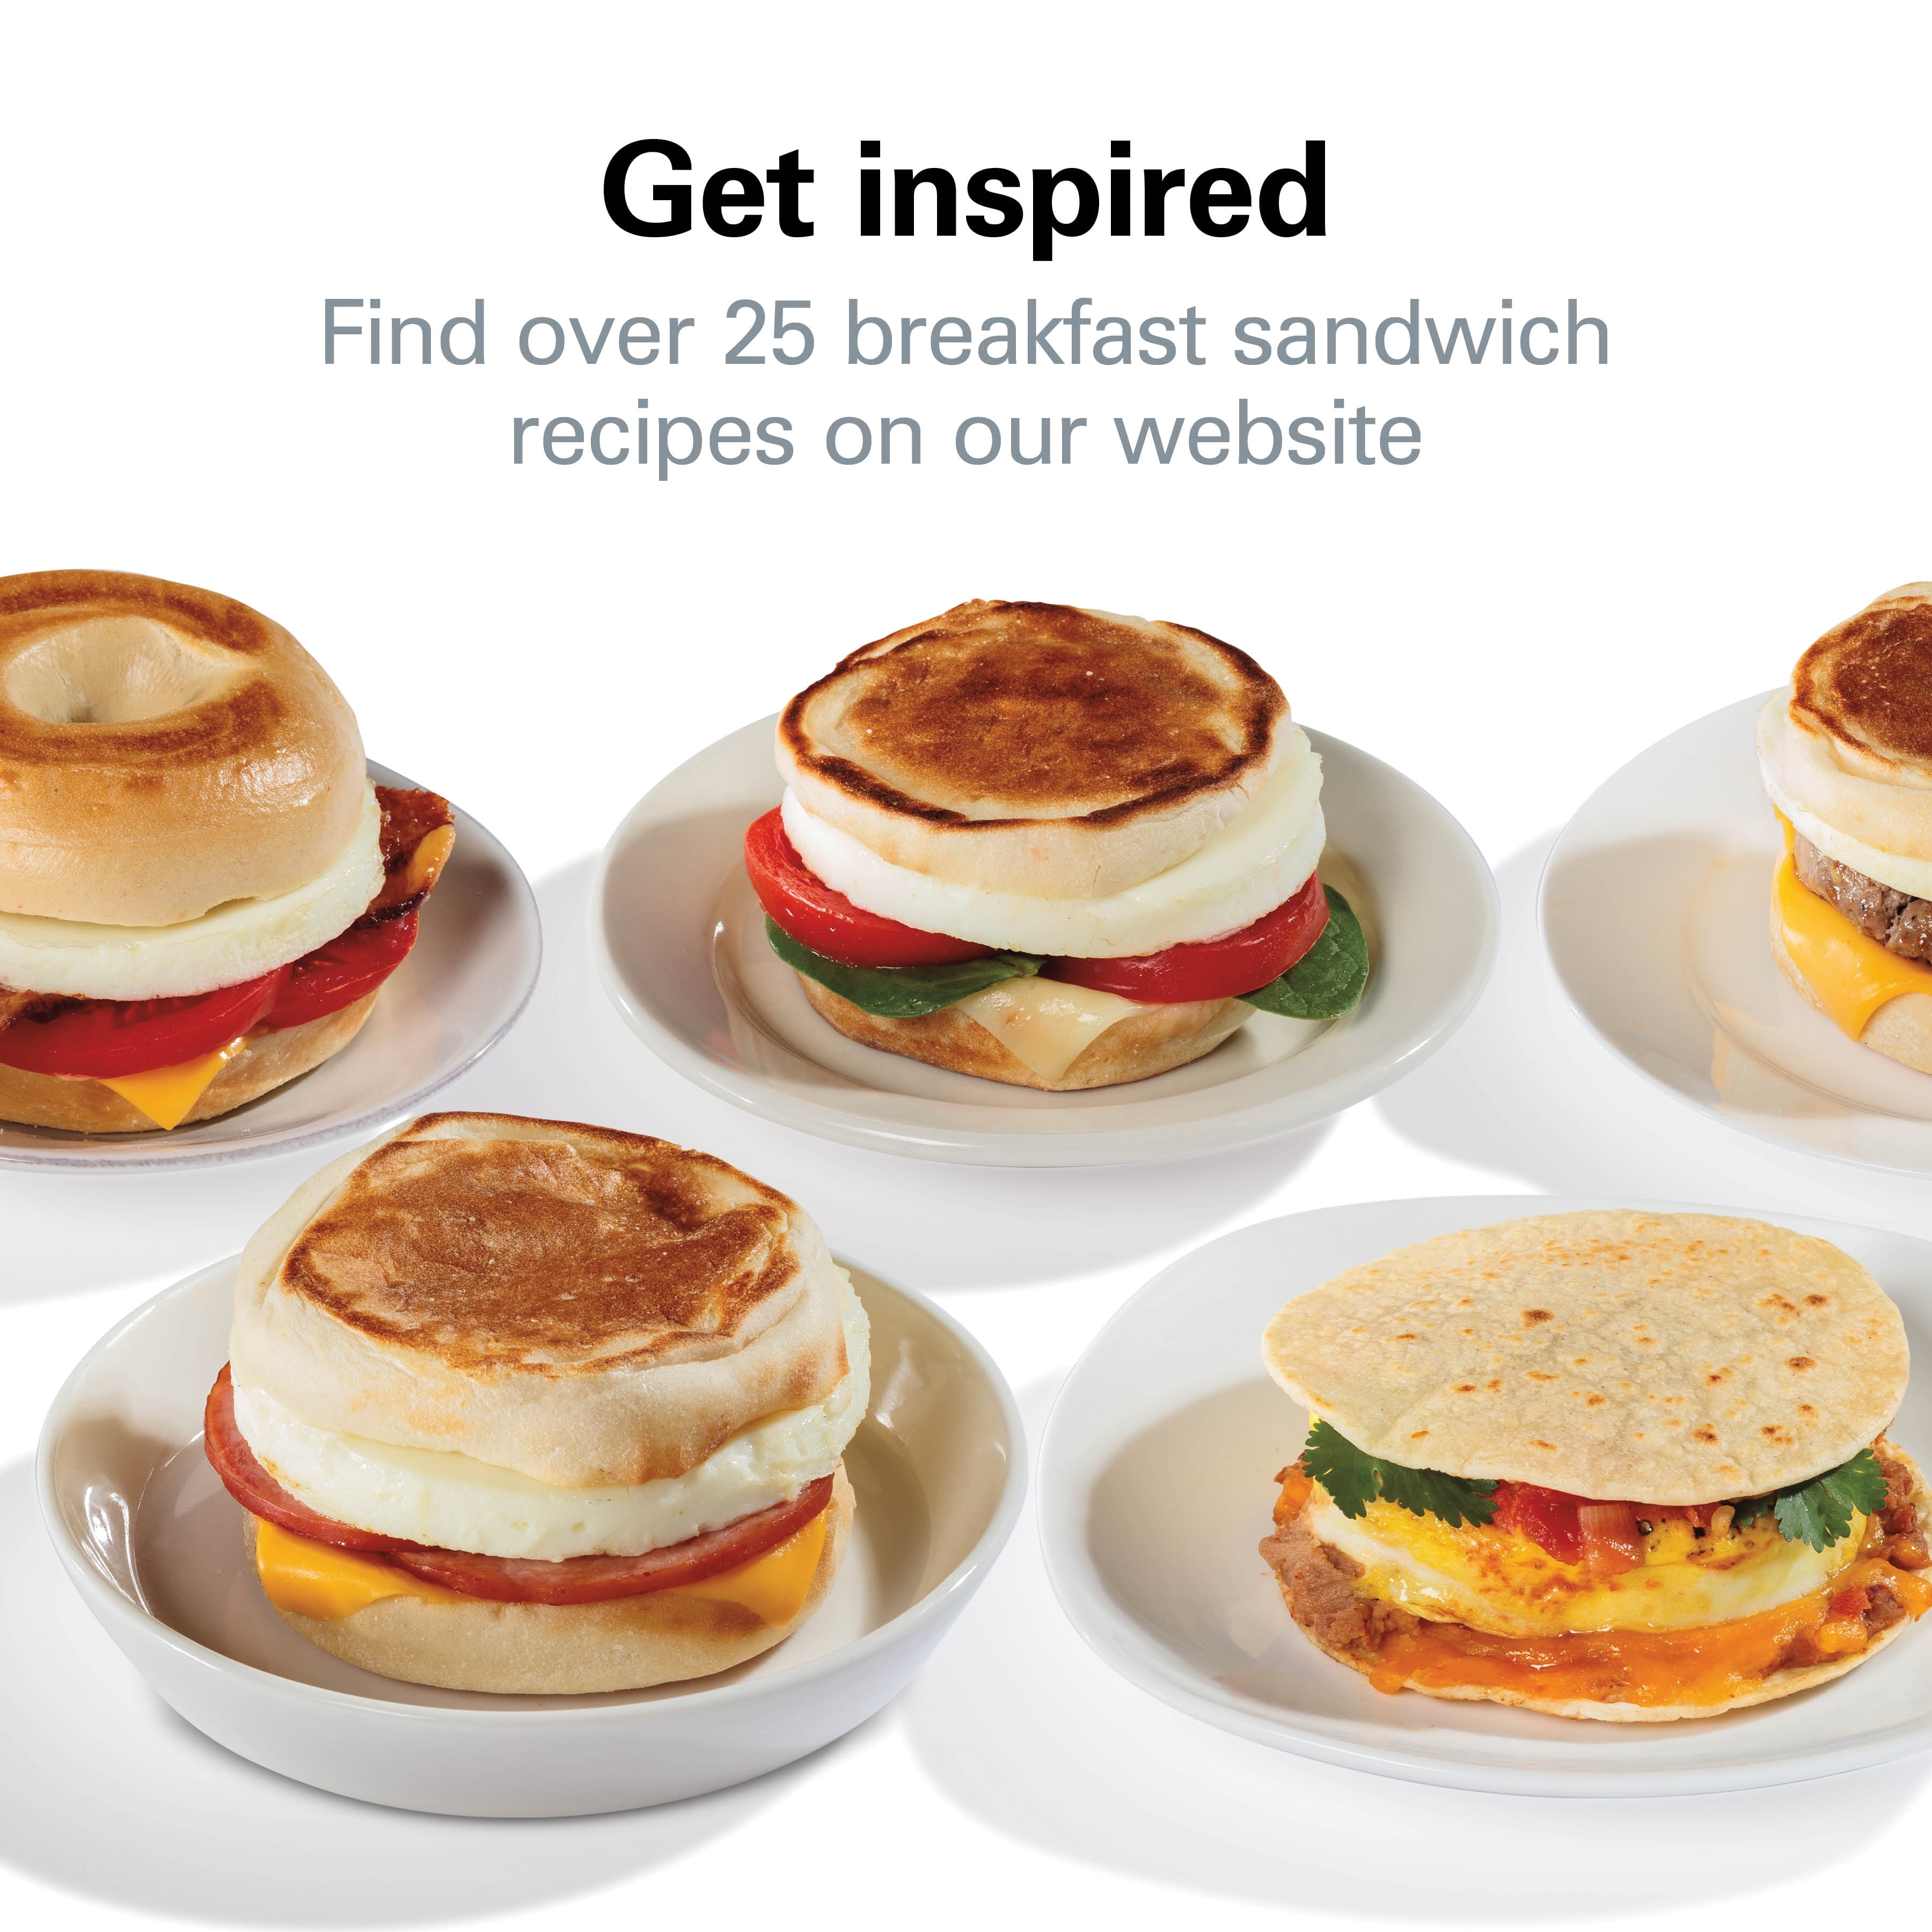 Hamilton Beach 600W Nonstick Breakfast Sandwich Maker 